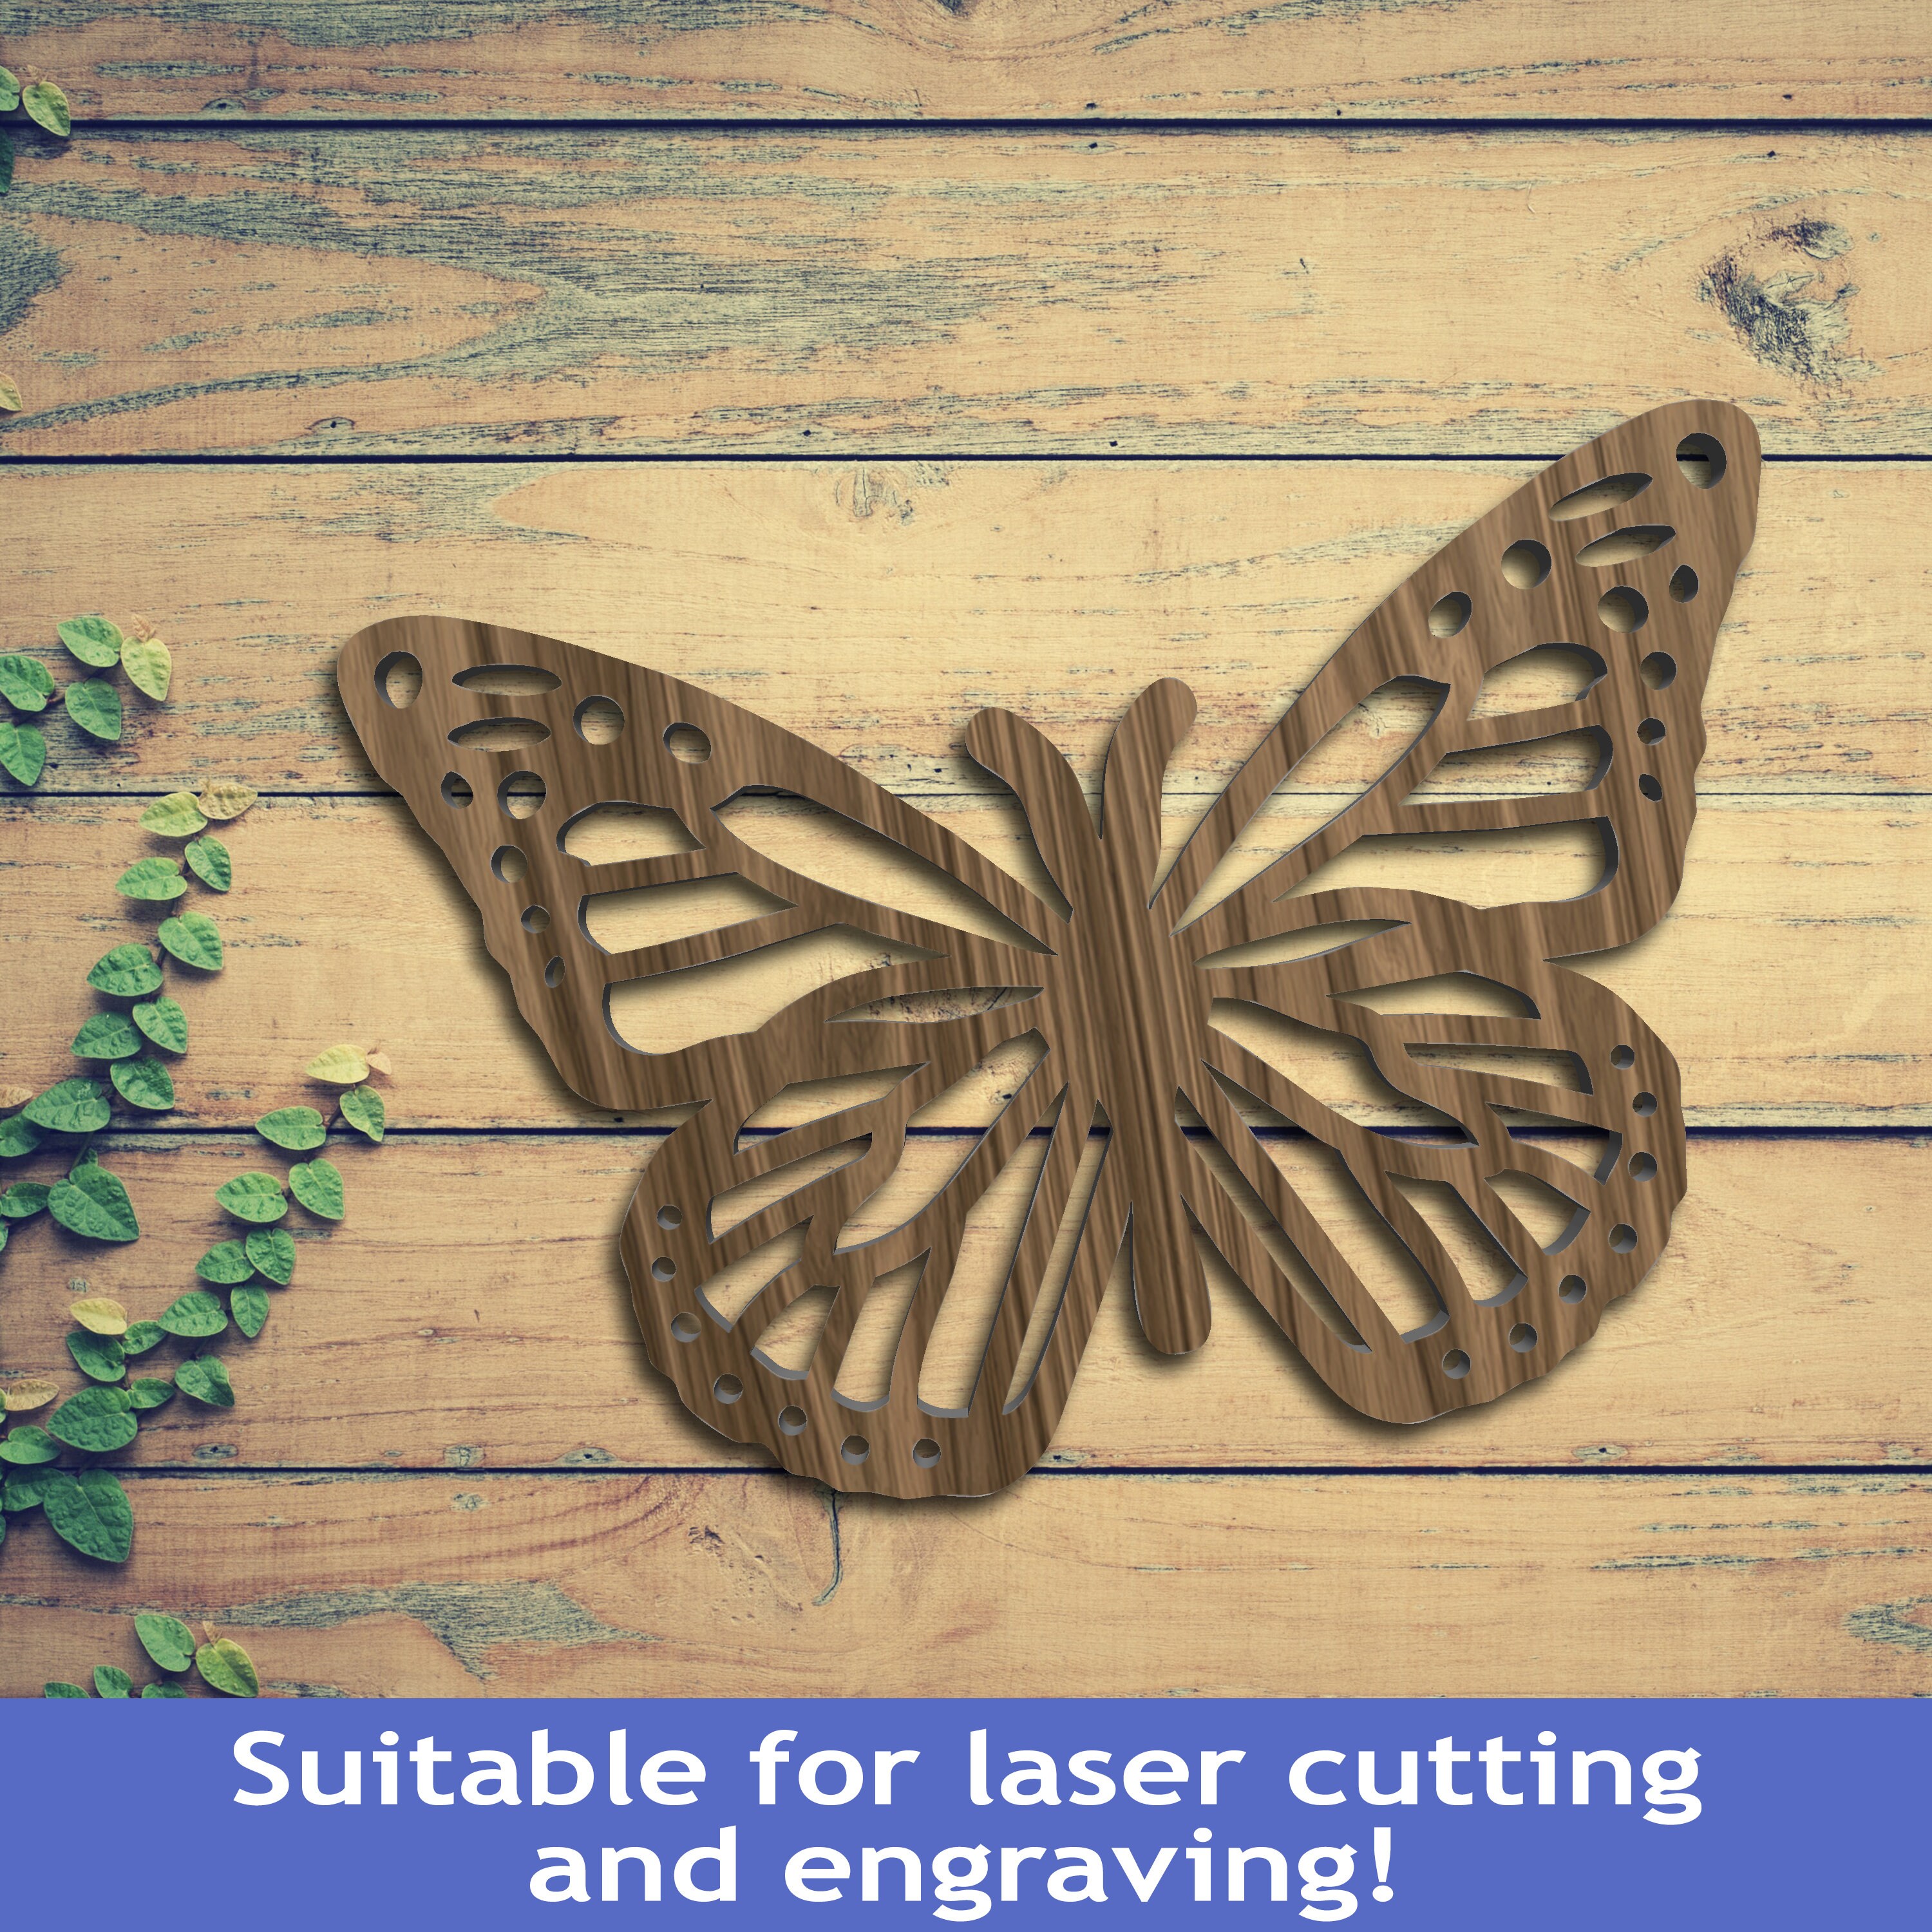 Set Butterflies Engraving Paper Cut Caser Cut Wood Cut Stencil Stock Vector  by ©somjaicindy@gmail.com 651732732